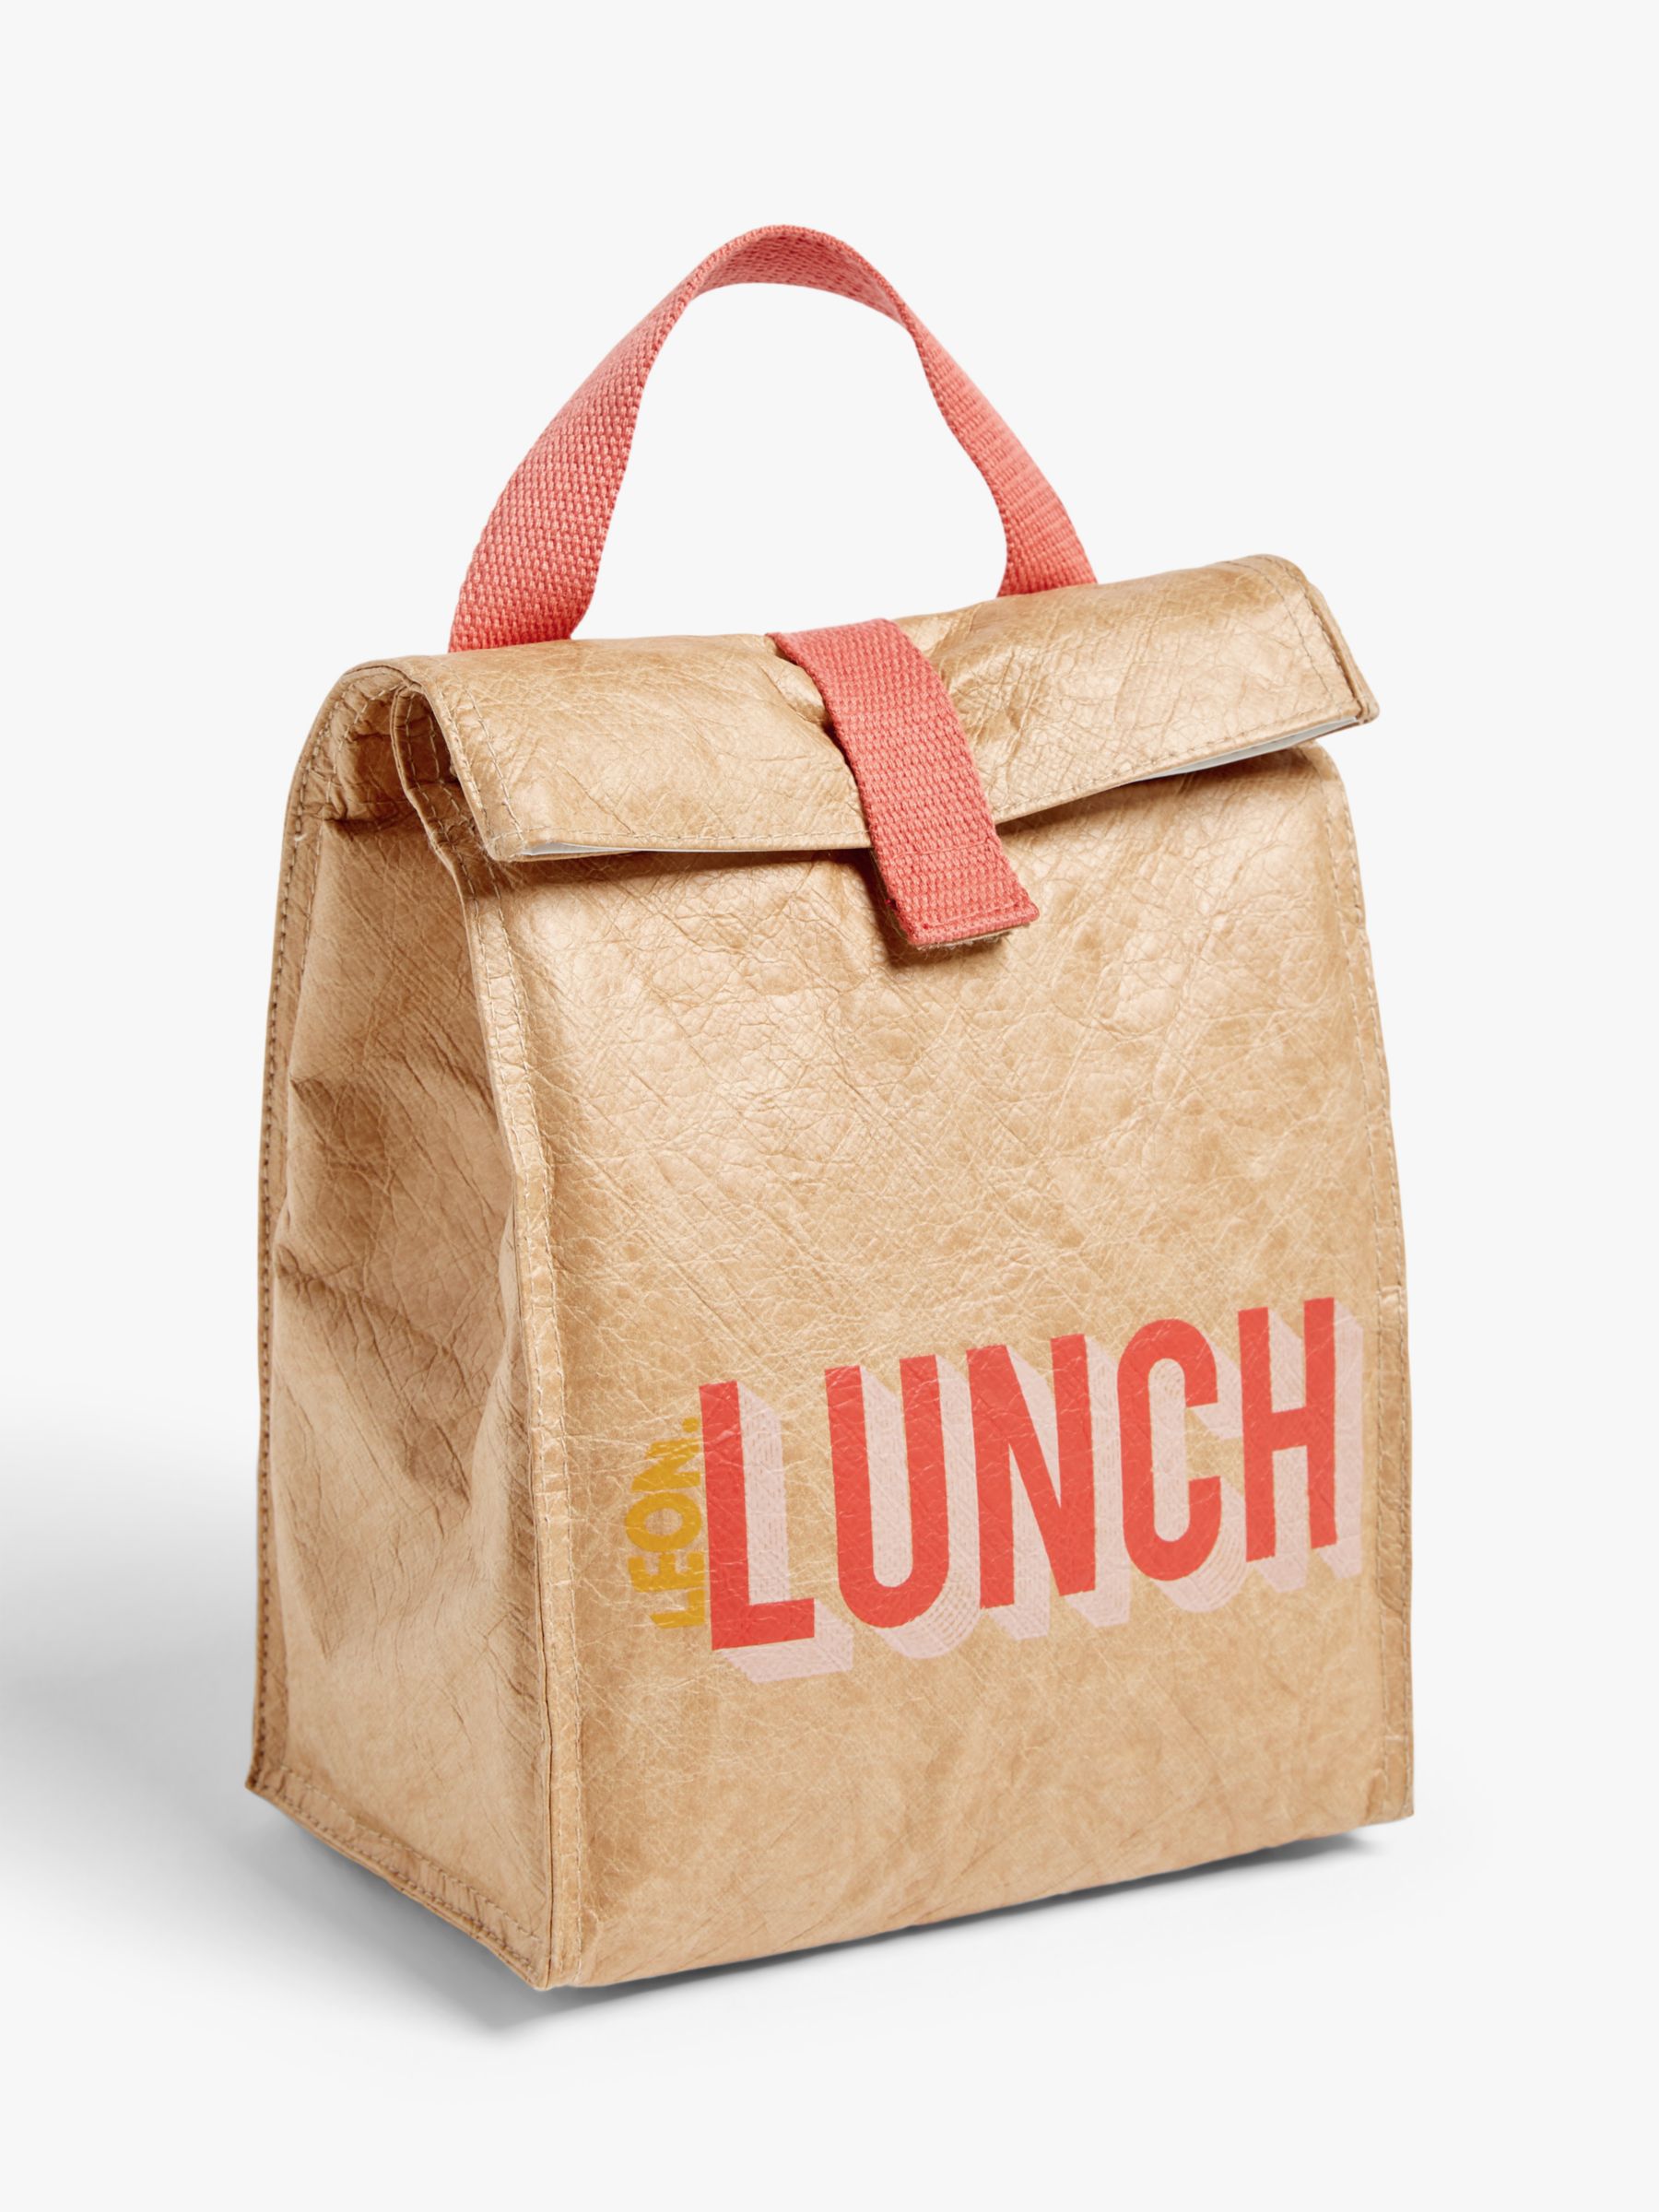 LEON Reusable Paper Lunch Cooler Bag at John Lewis & Partners